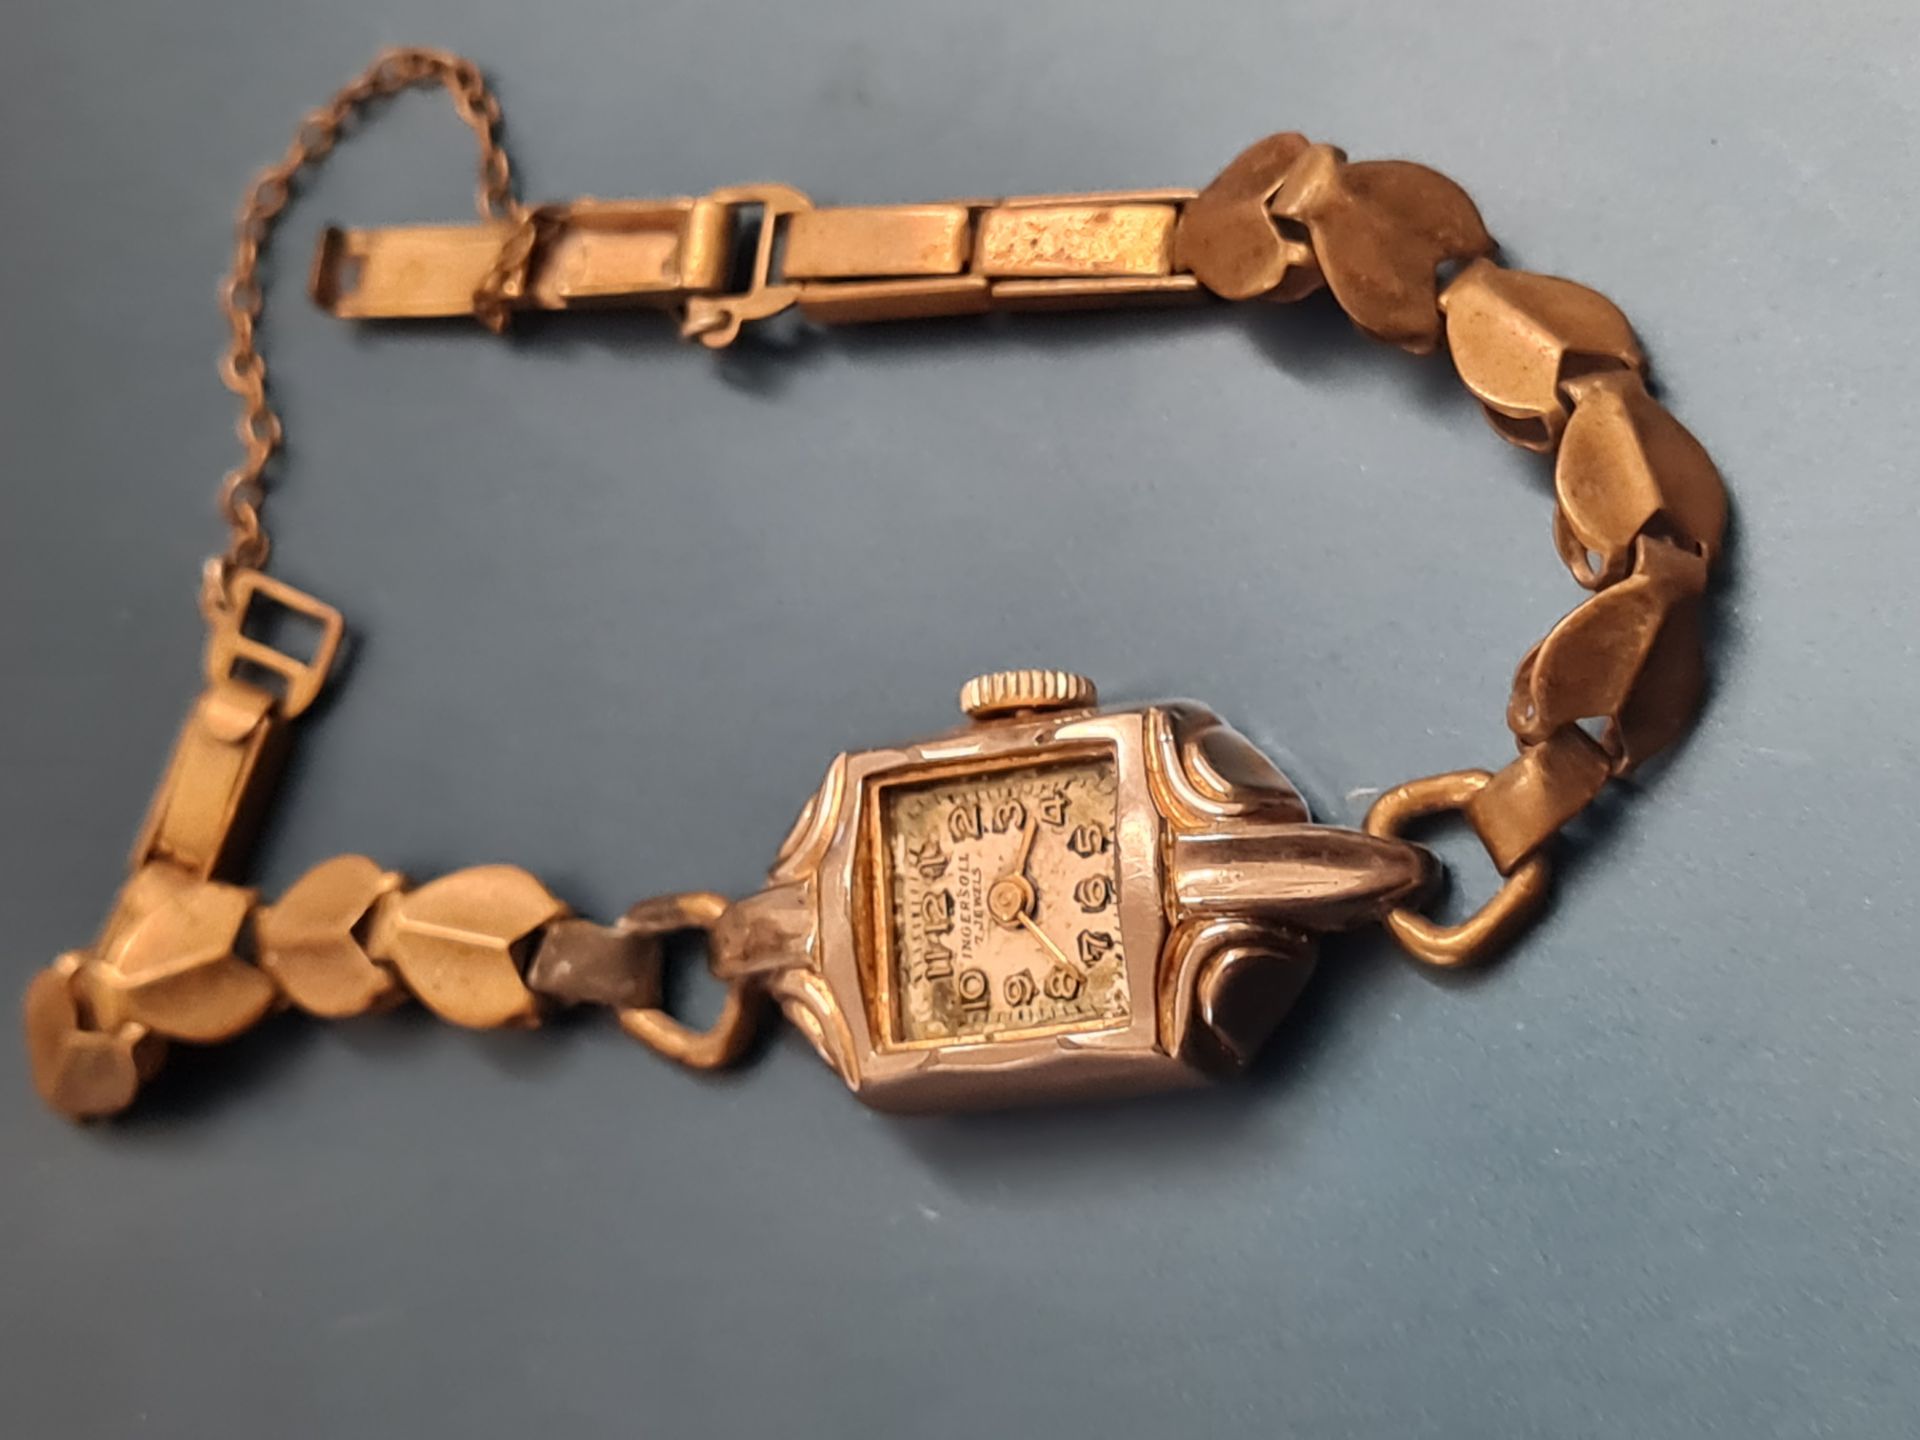 Vintage ingersoll watch